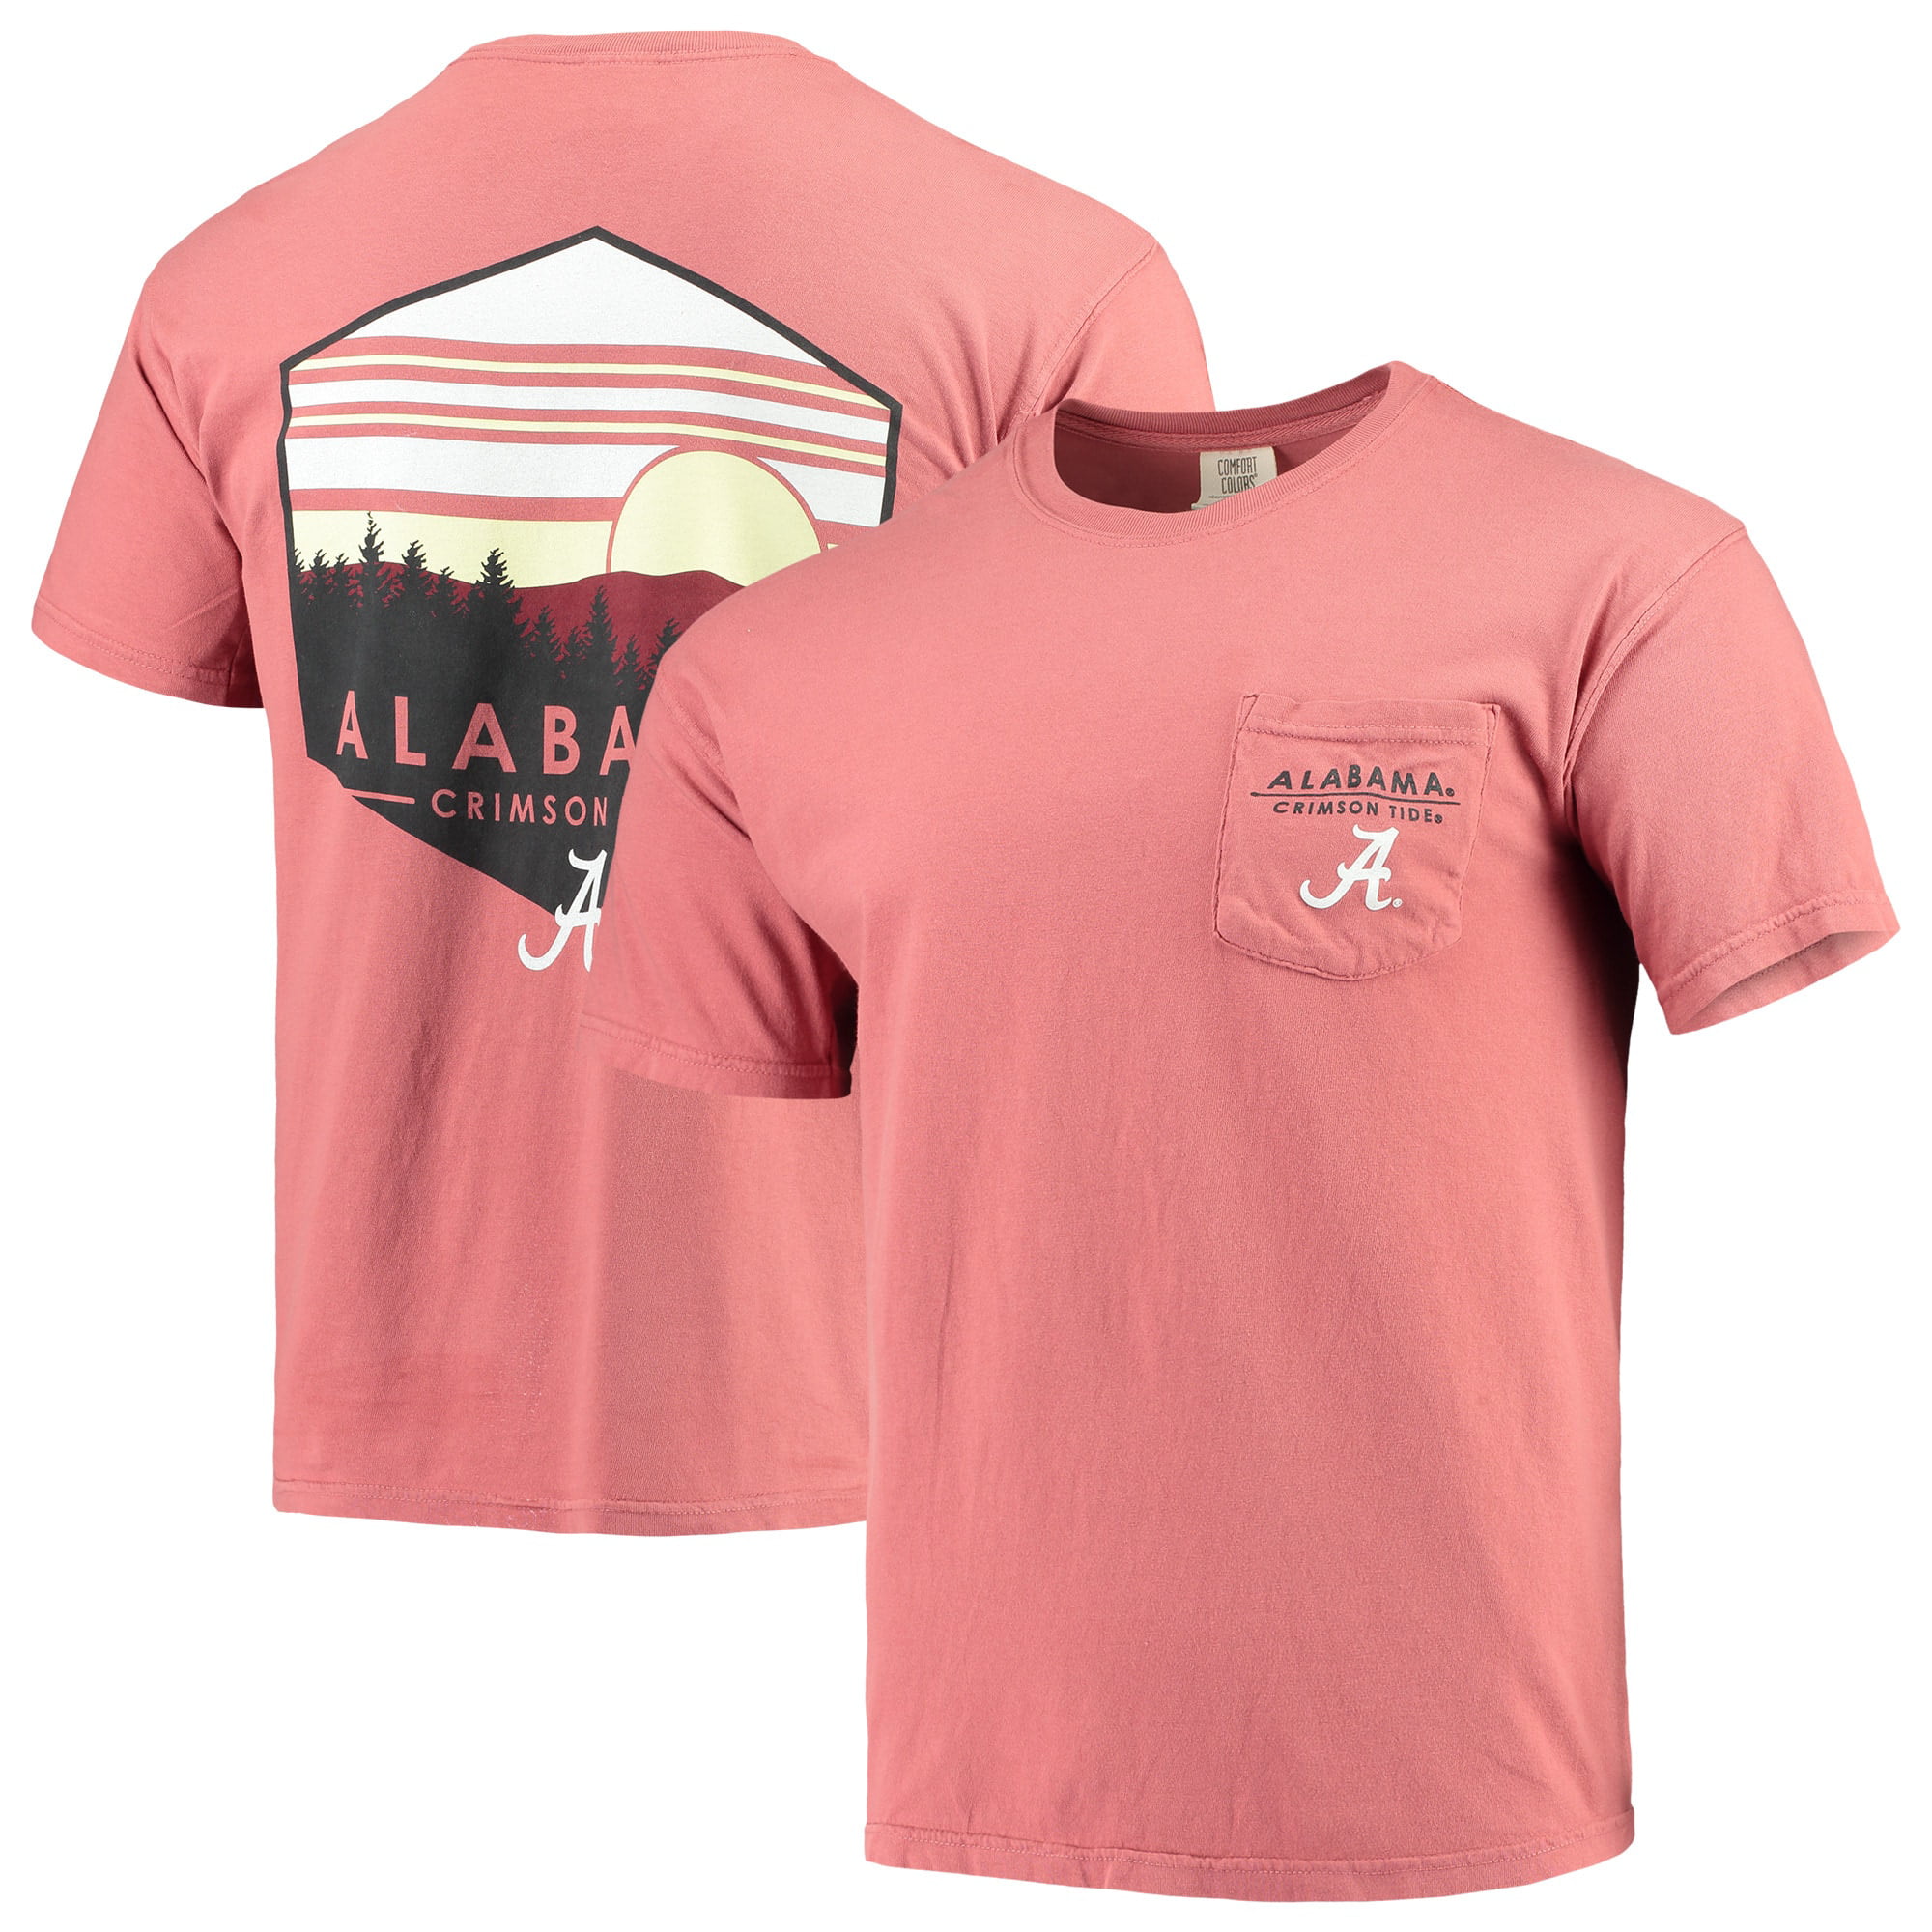 Arkansas Shirt Arkansas TShirt, Arkansas T-shirt College Shirt Comfort Color Shirt